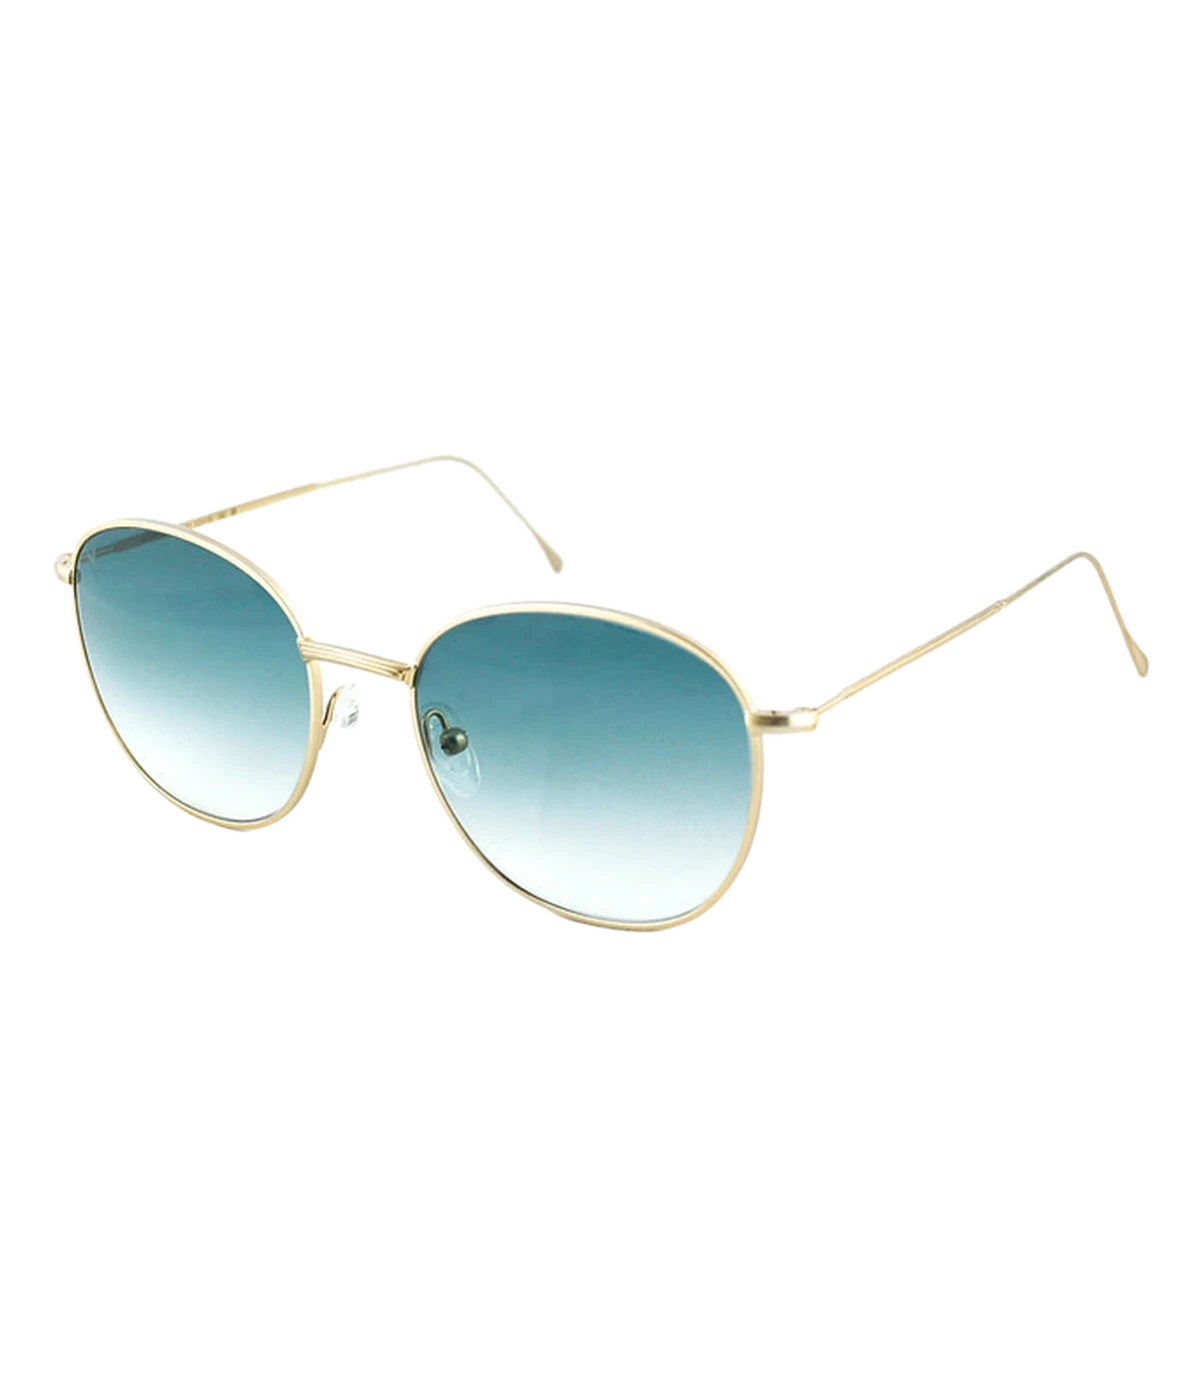 Maverick Sunglasses in Shiny Gold & Aquamarine